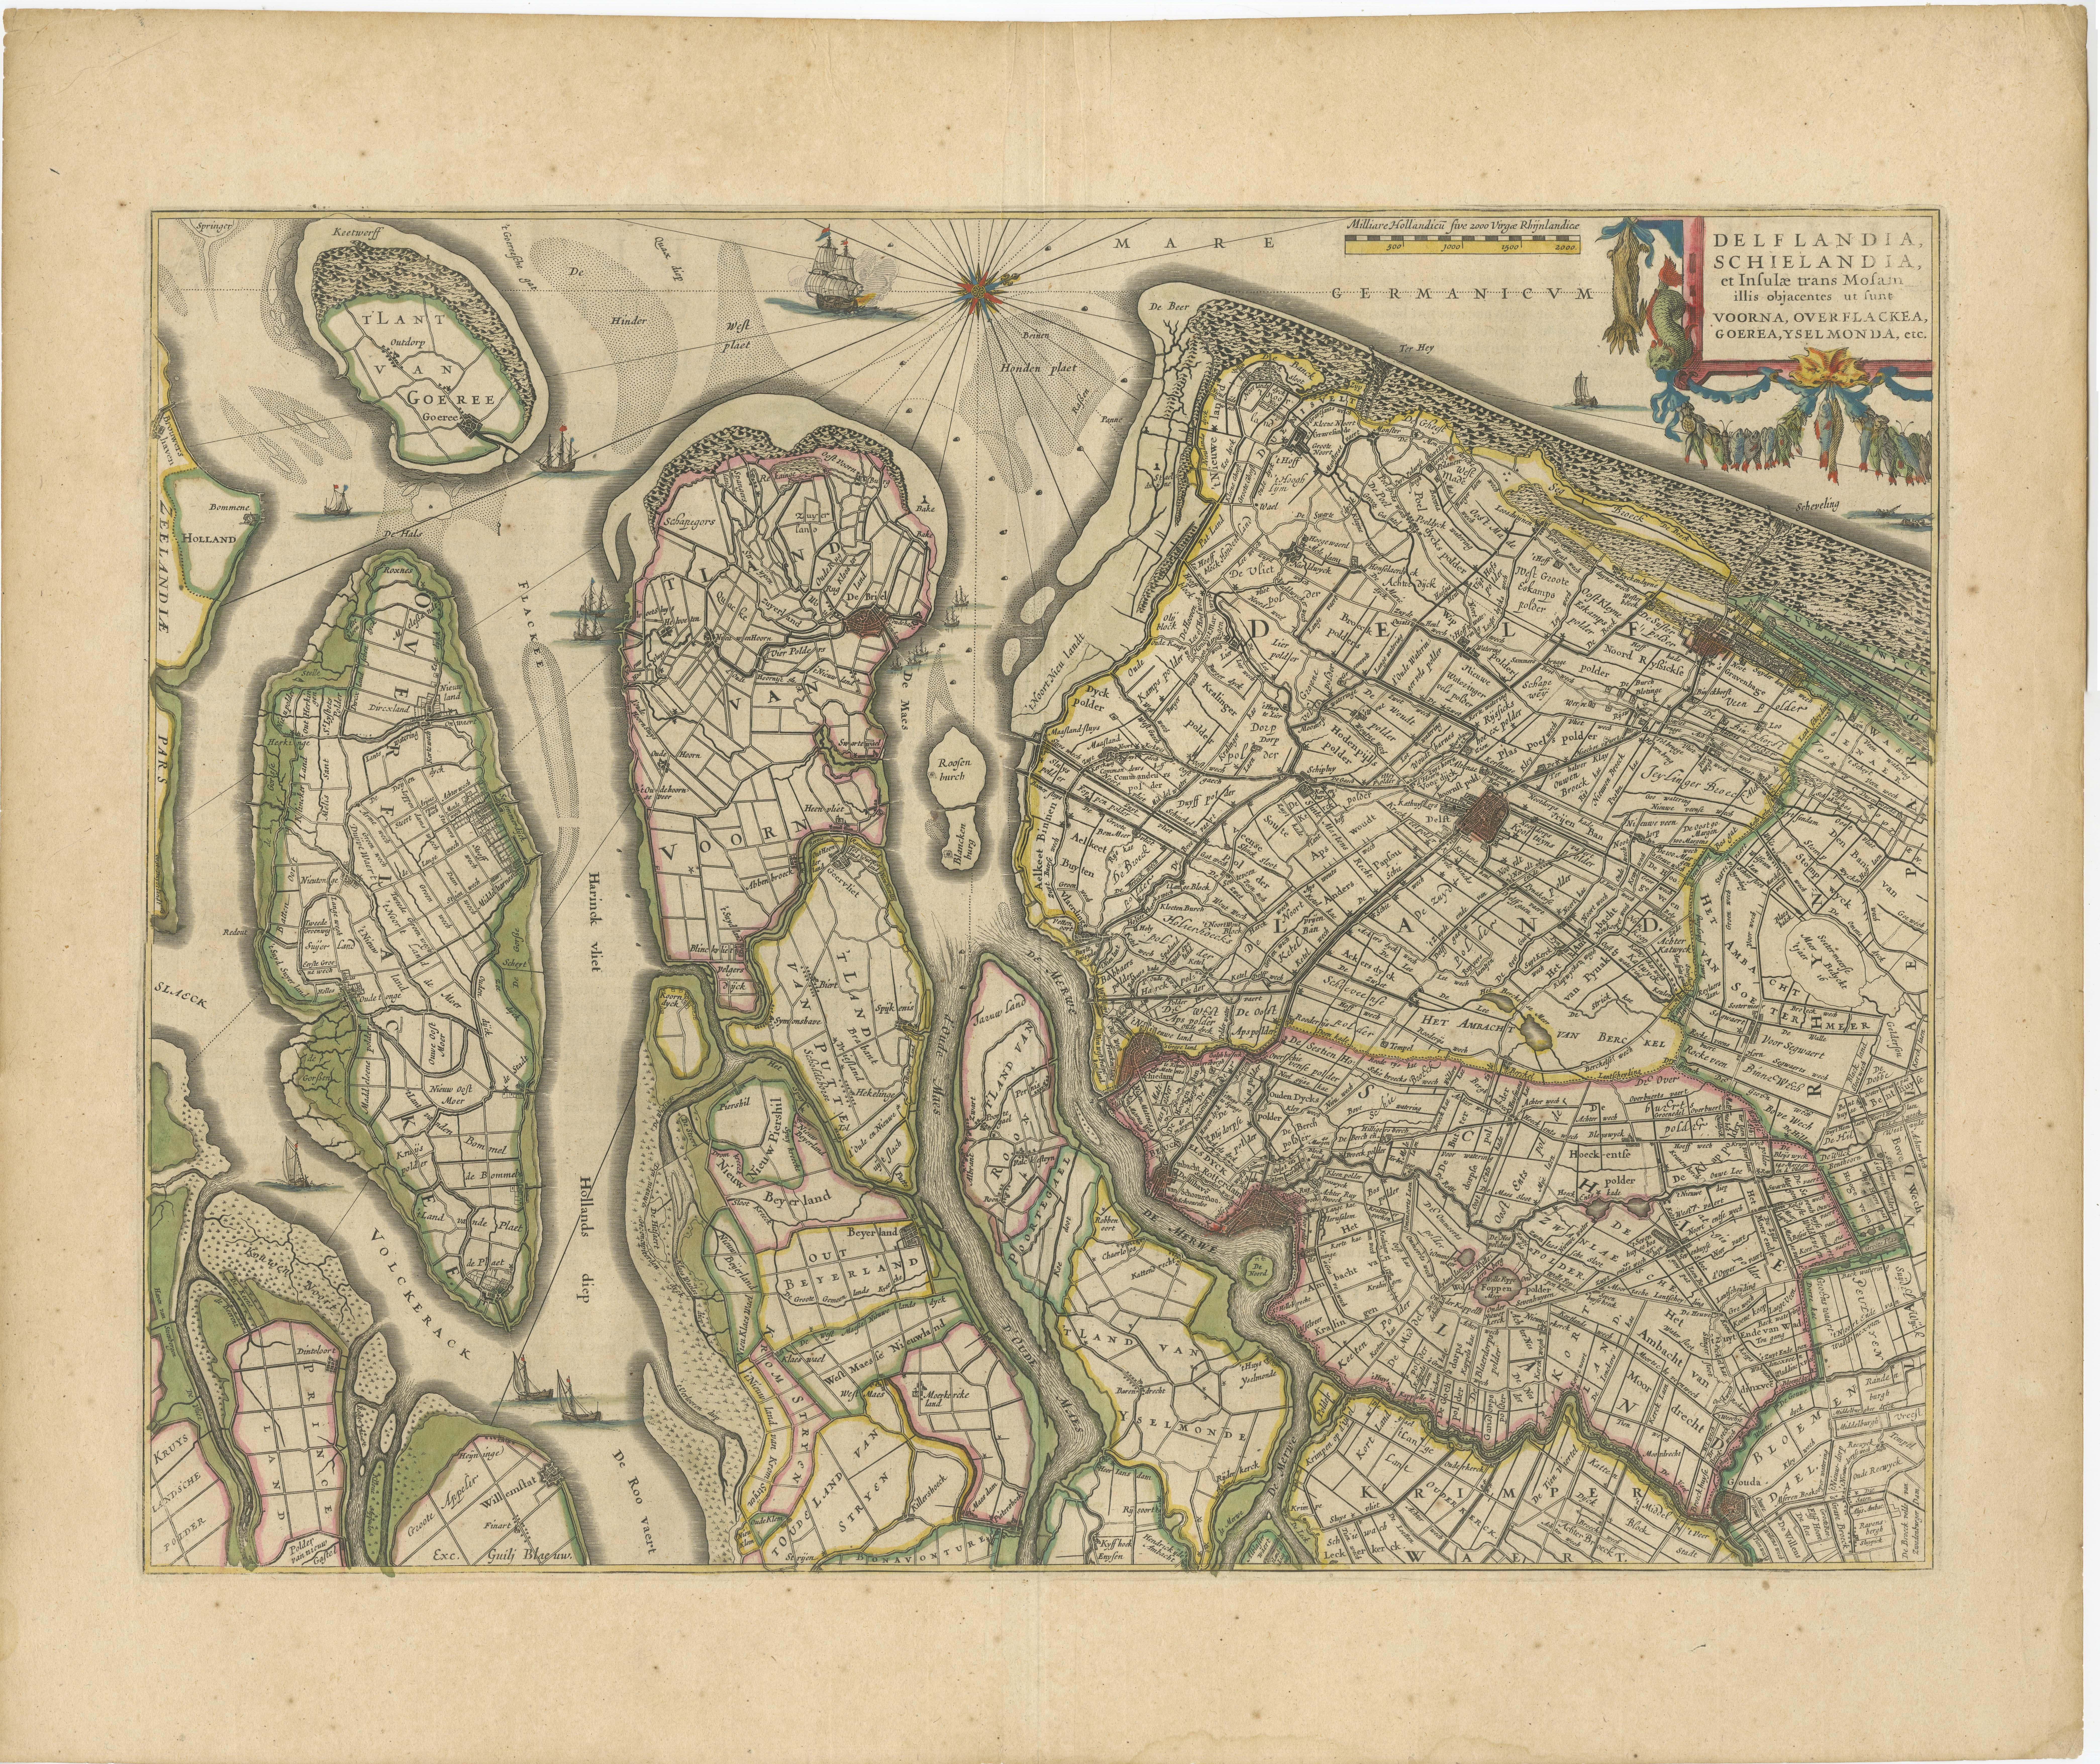 Antique map titled 'Delflandia, Schielandia, et Insulae (..)'. Original antique map of Delfland, Schieland and islands of Zuid-Holland, the Netherlands. The 'Zuid-Hollandse Eilanden' include Rozenburg, IJsselmonde, Goeree, Overflakke and others.